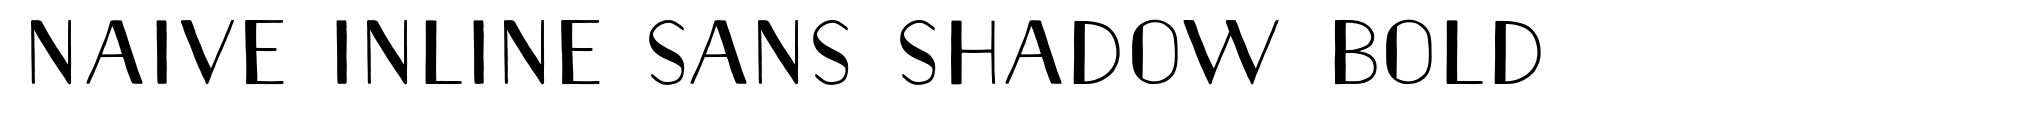 Naive Inline Sans Shadow Bold image